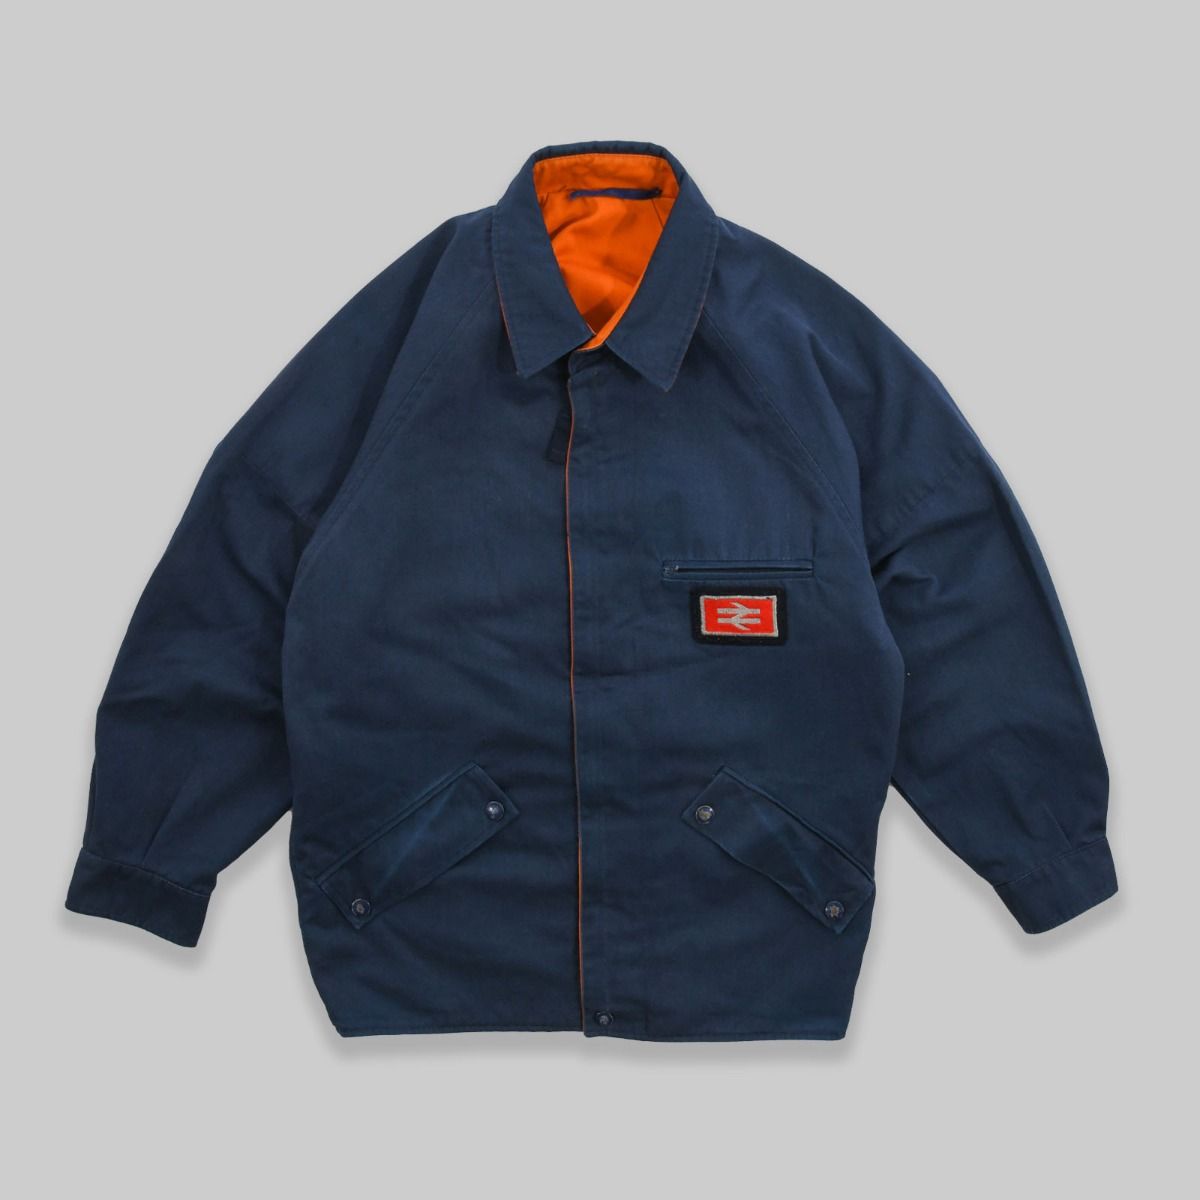 Vintage 1980s British Rail Workers Chore Jacket